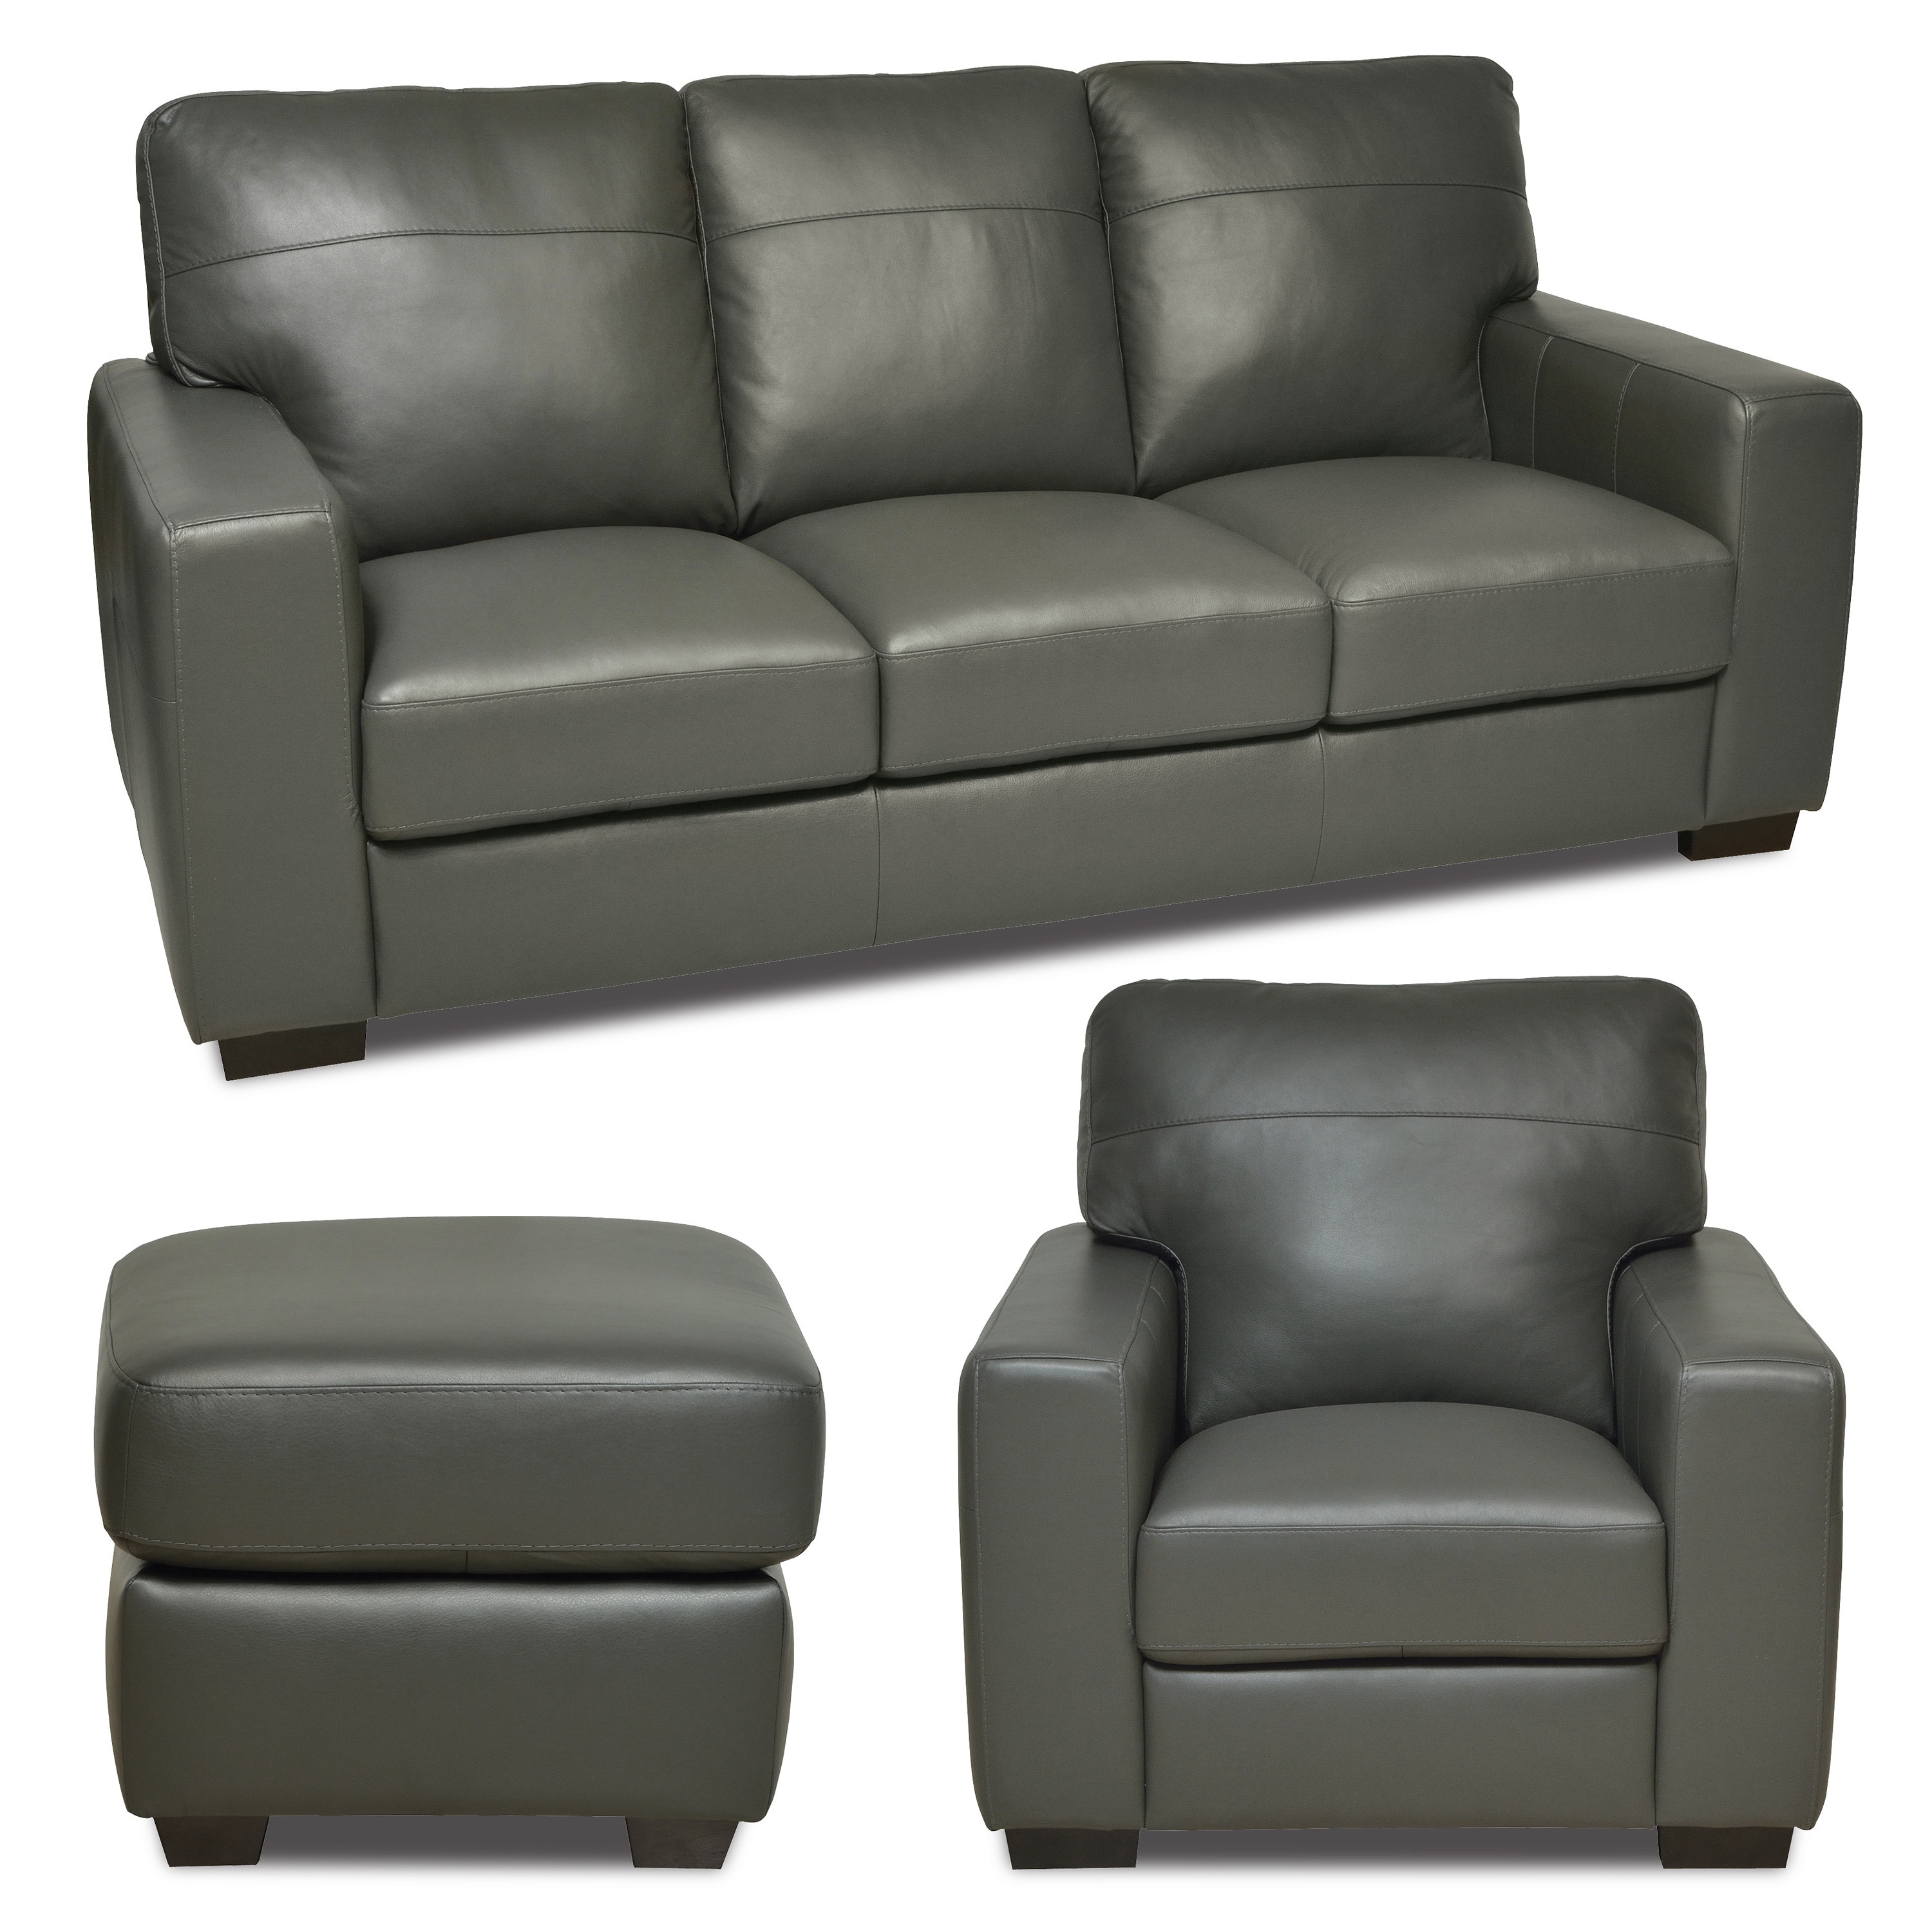 Italian Leather Gray Sofa And Chair Ottoman Set 855da097 E85a 49db 802f 2501d65eb3c0 